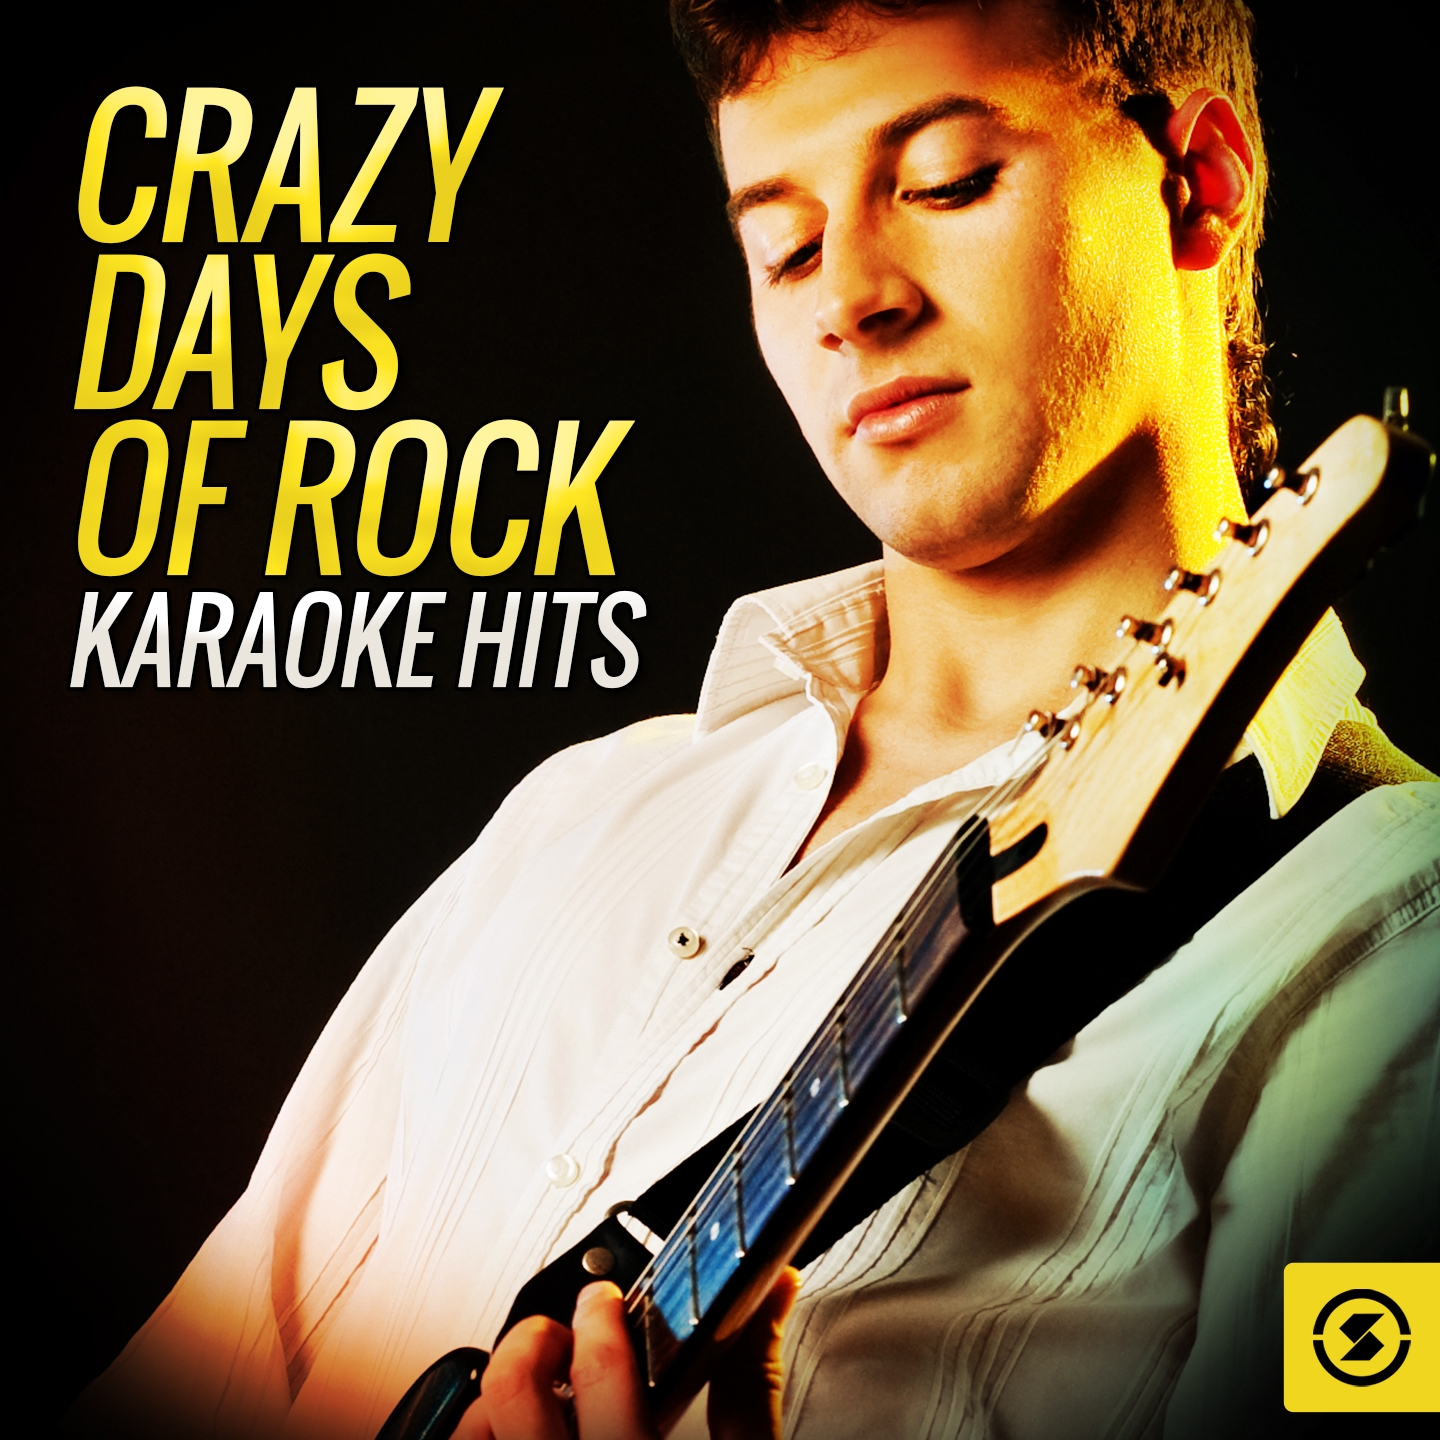 Crazy Days of Rock Karaoke Hits